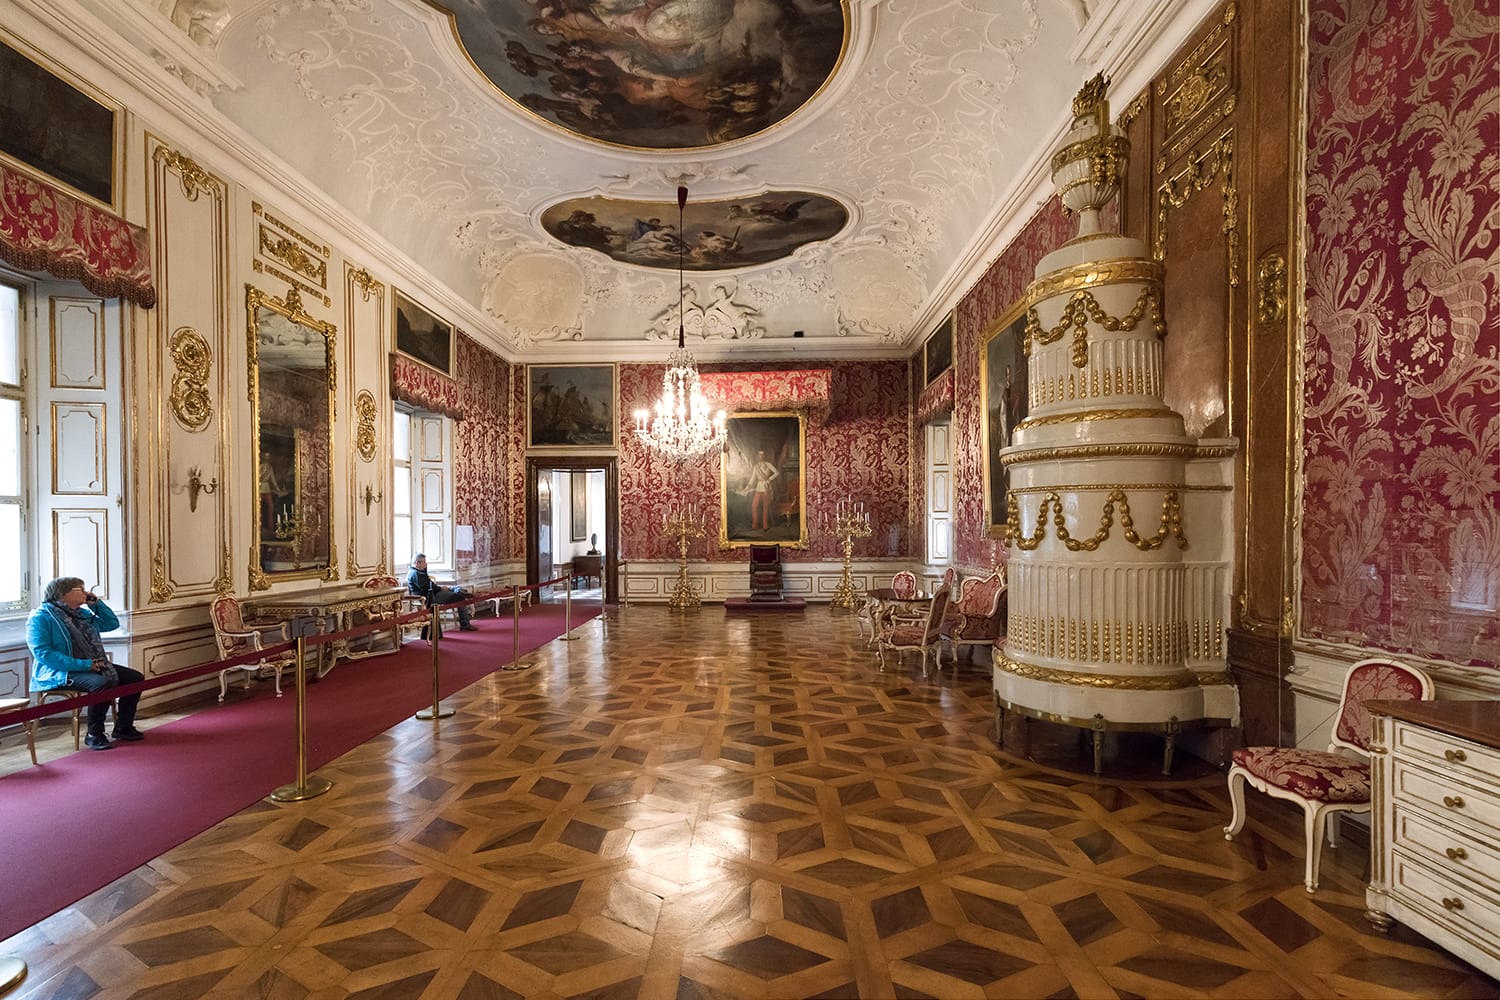 Baroque State Rooms of the Residenz in the DomQuartier, ένα μοναδικό πολιτιστικό σημείο στην καρδιά της πόλης του Σάλτσμπουργκ, στην Αυστρία